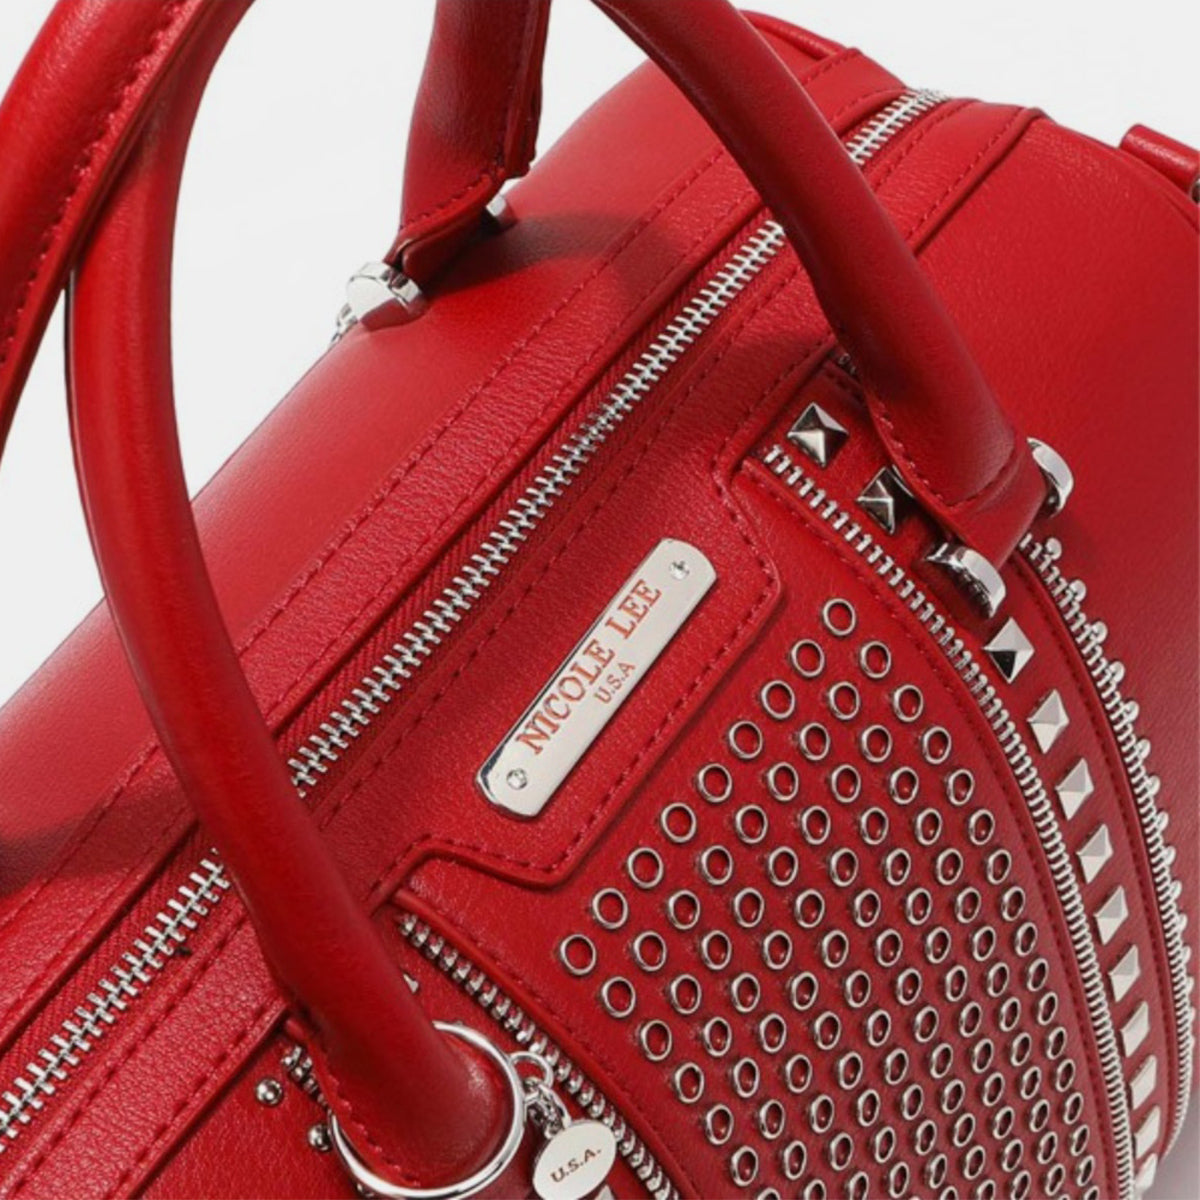 TEEK - Red NL Studded Boston Bag BAG TEEK Trend   